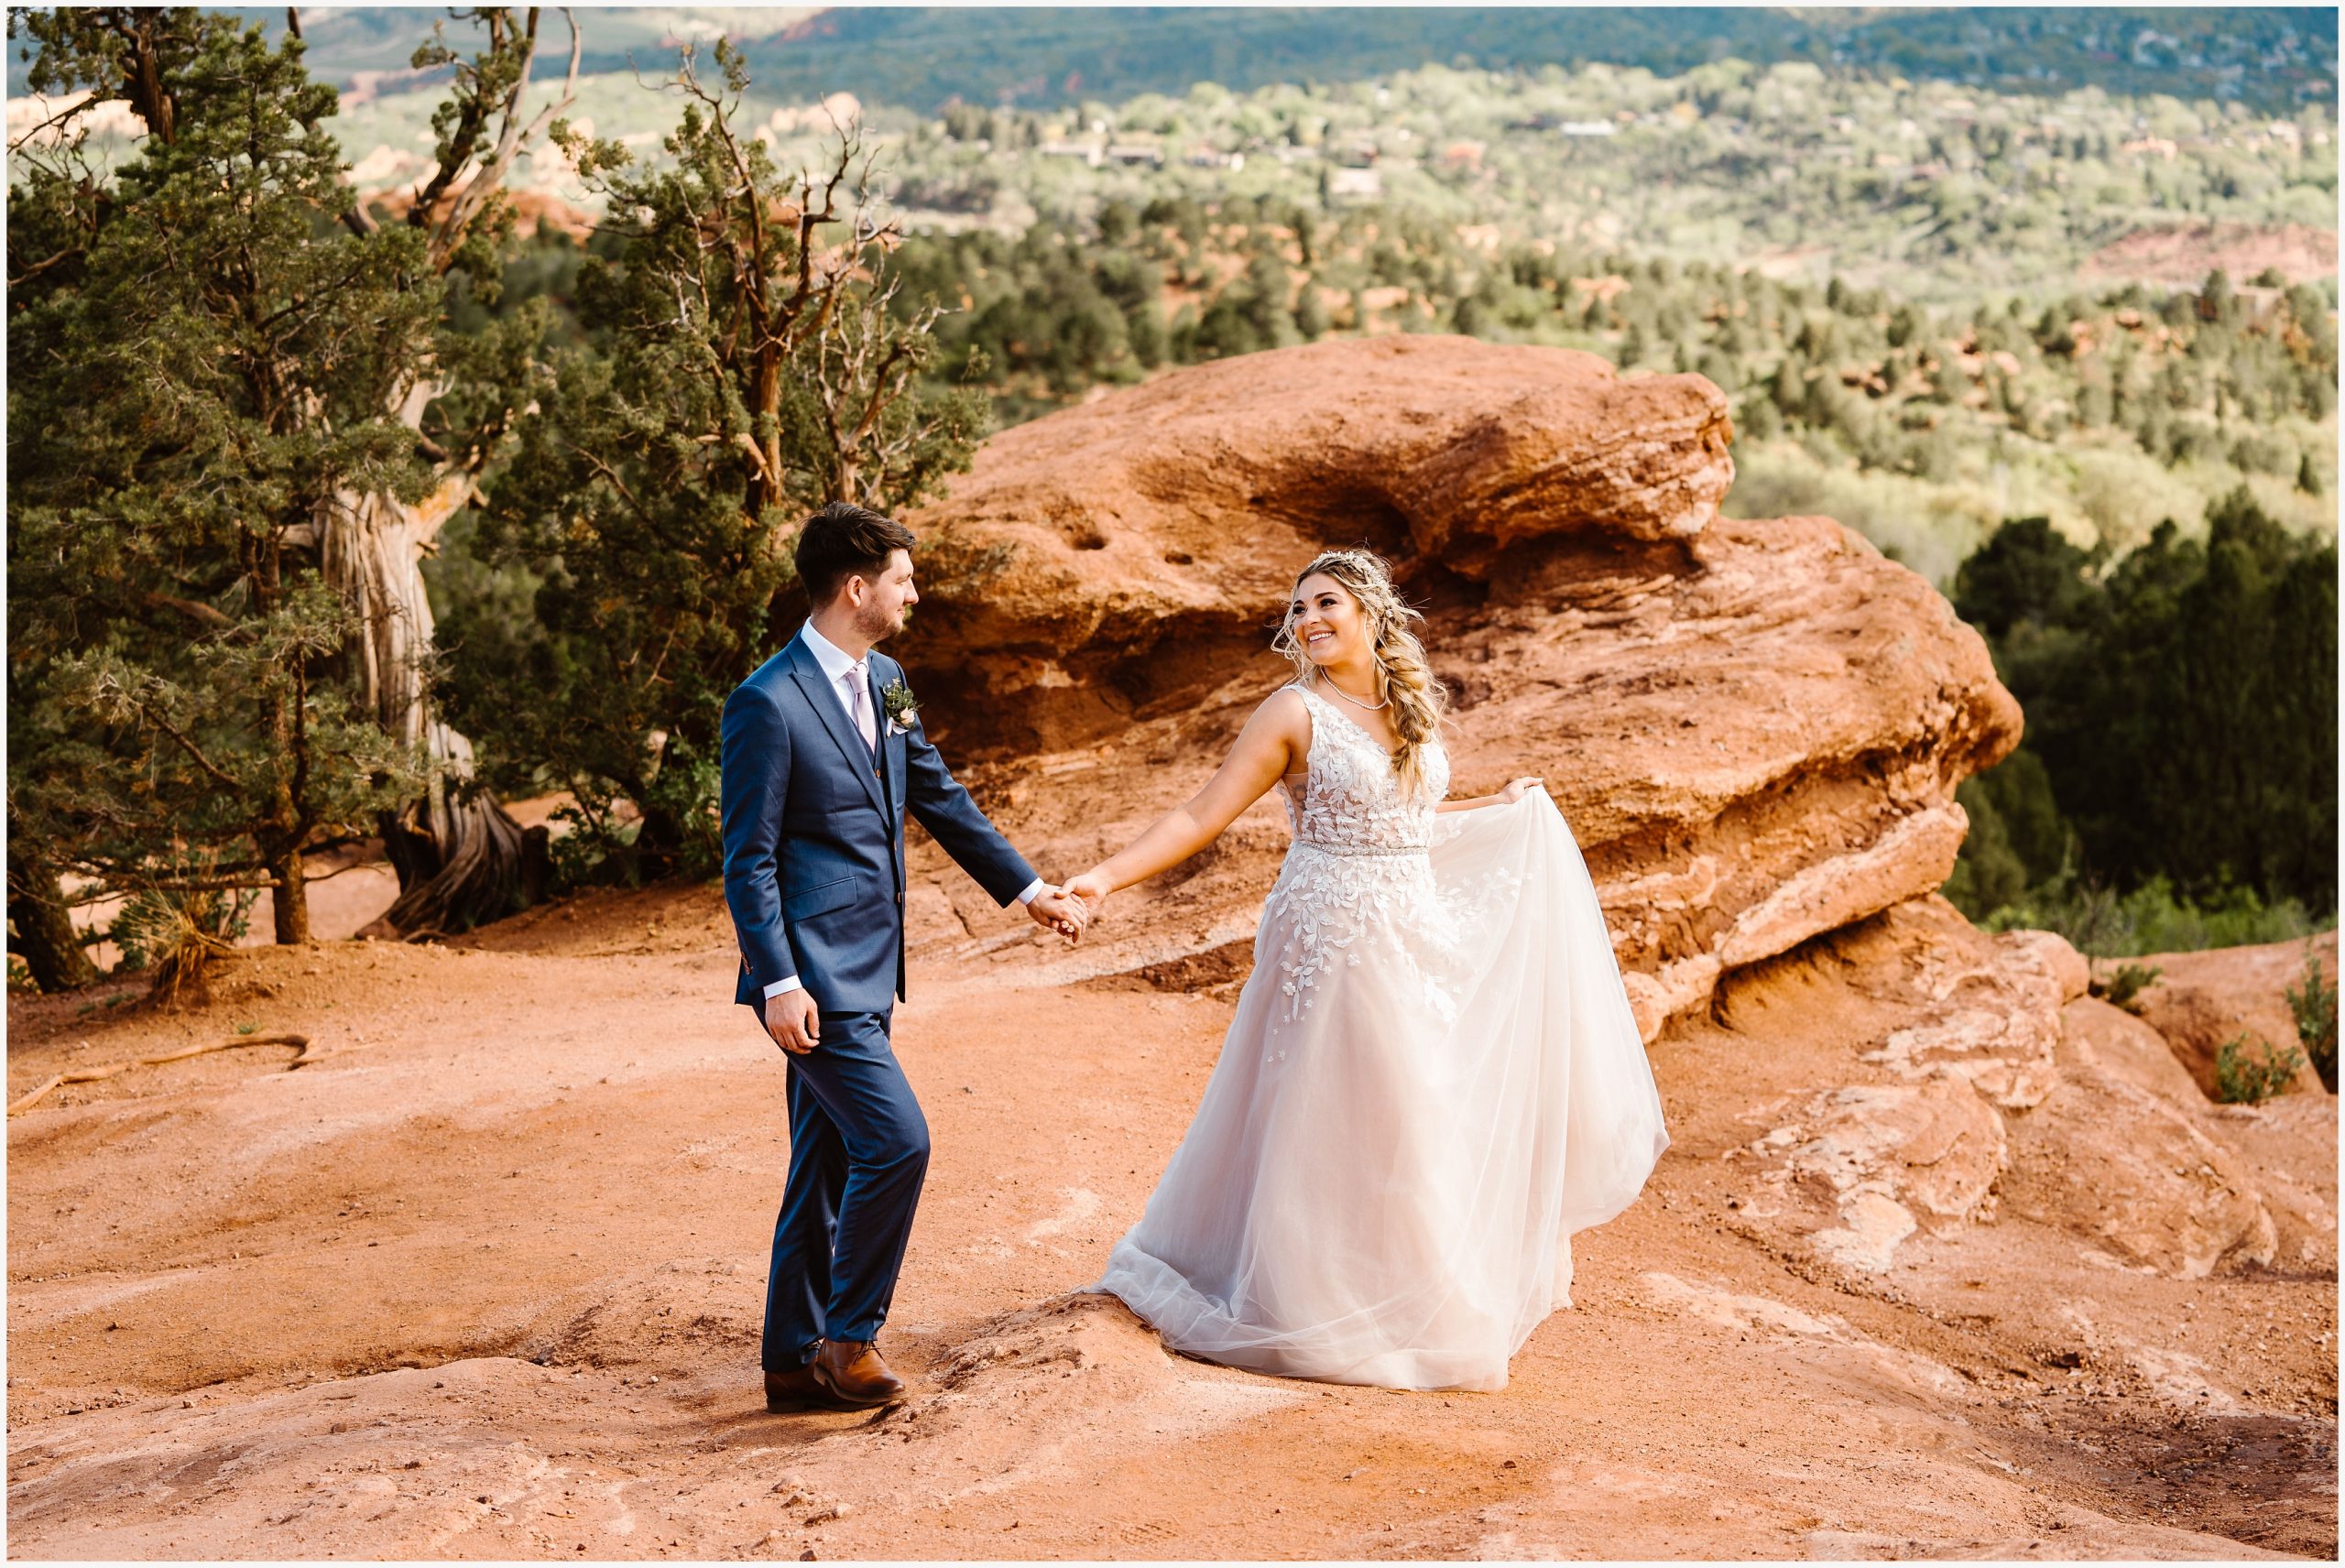 Bride and groom eloping near red rocks by Colorado Springs